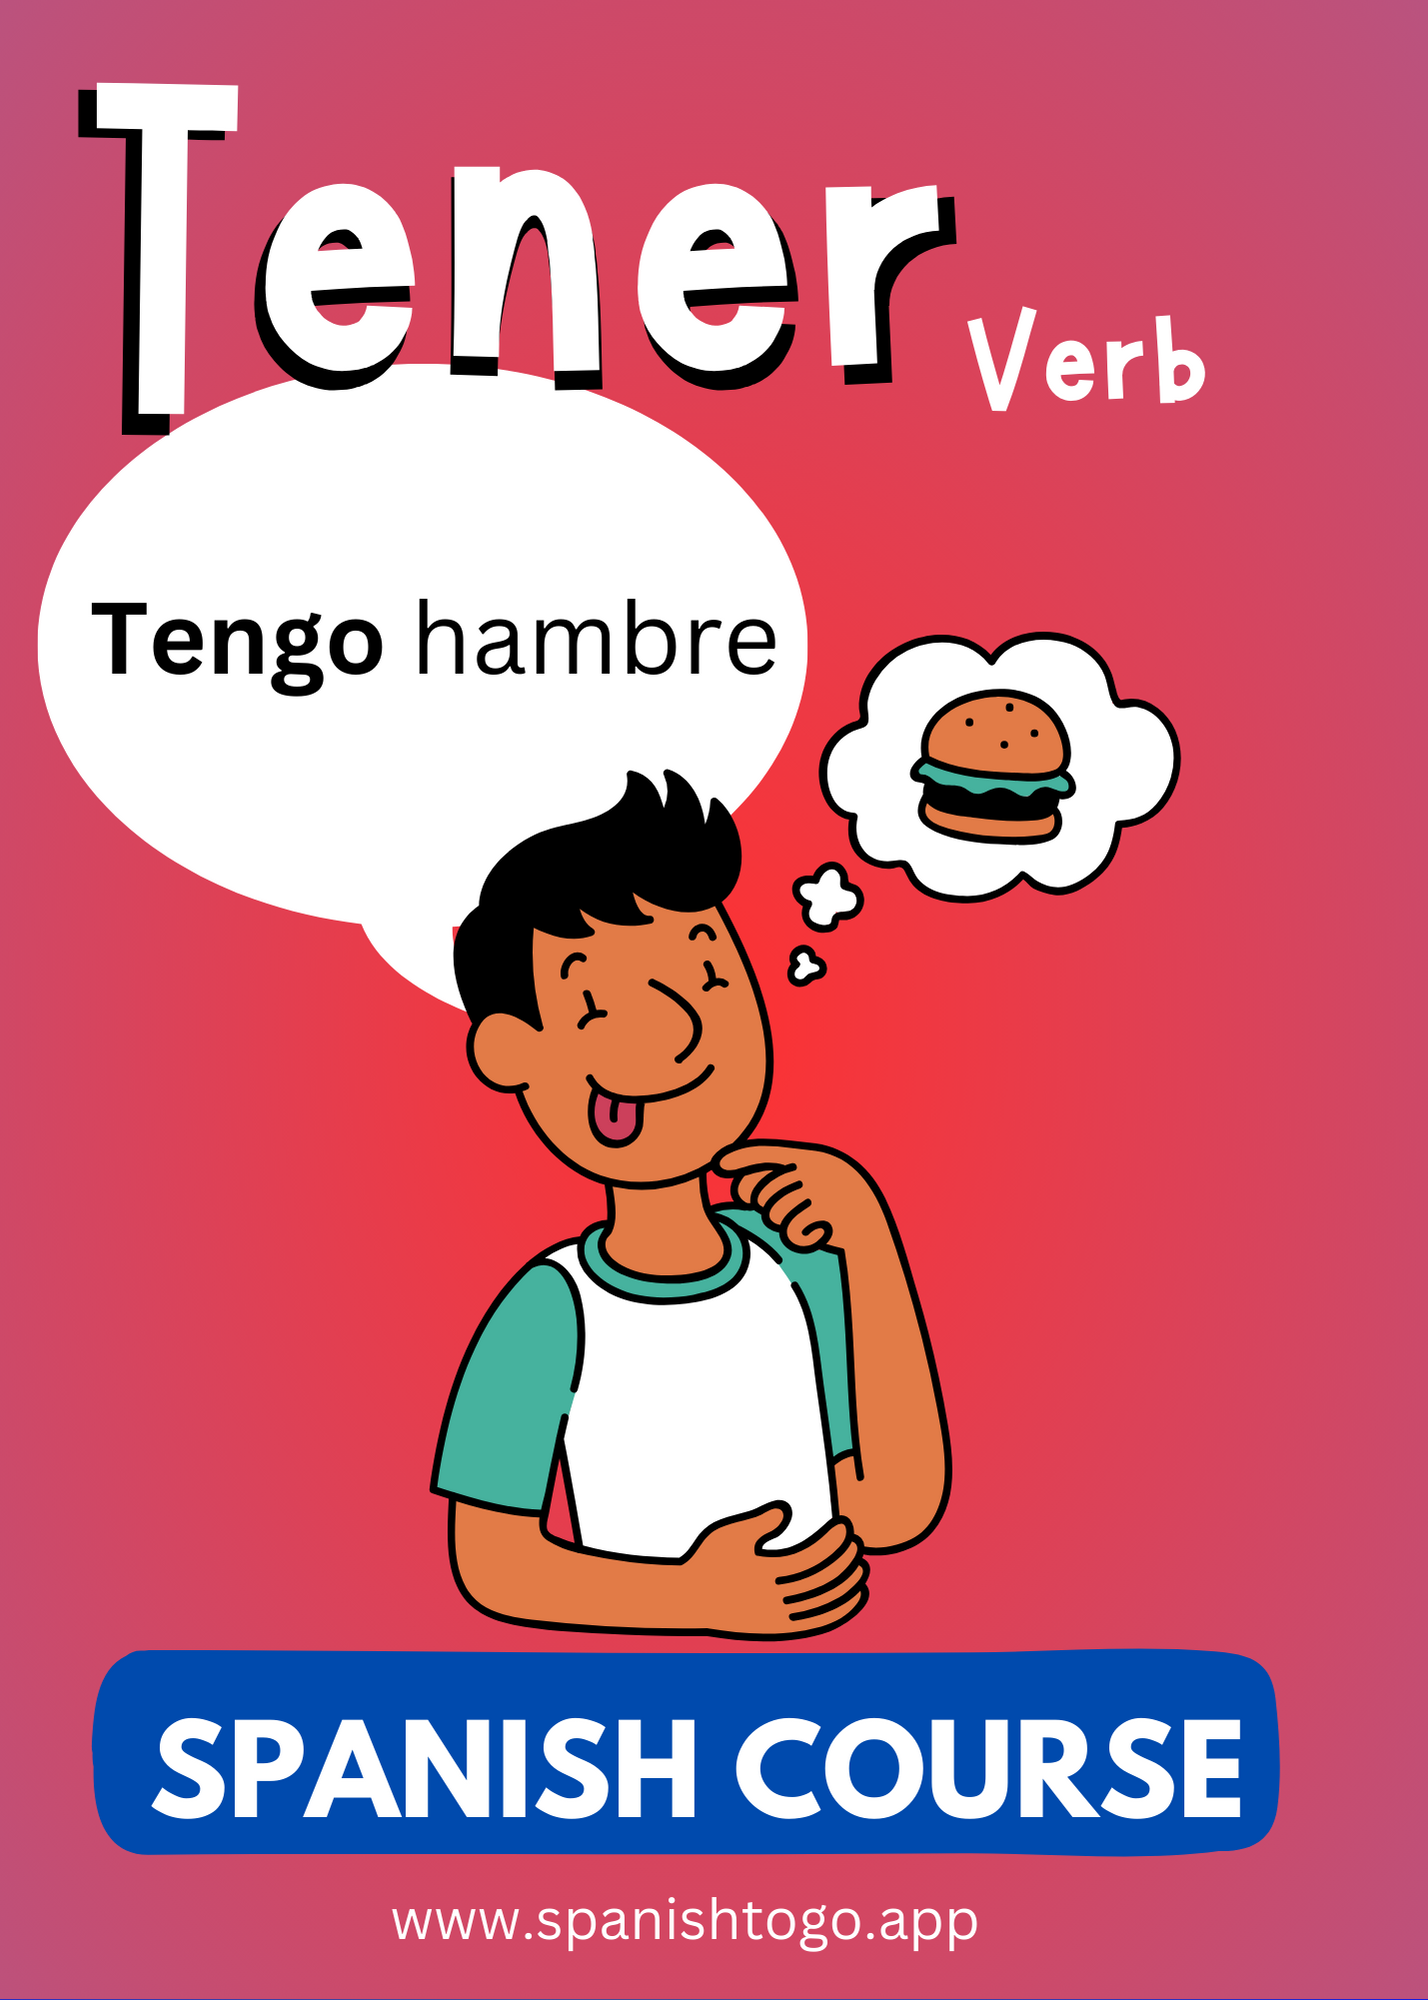 Conquer ‘Tener’: A Comprehensive Spanish Verb Course